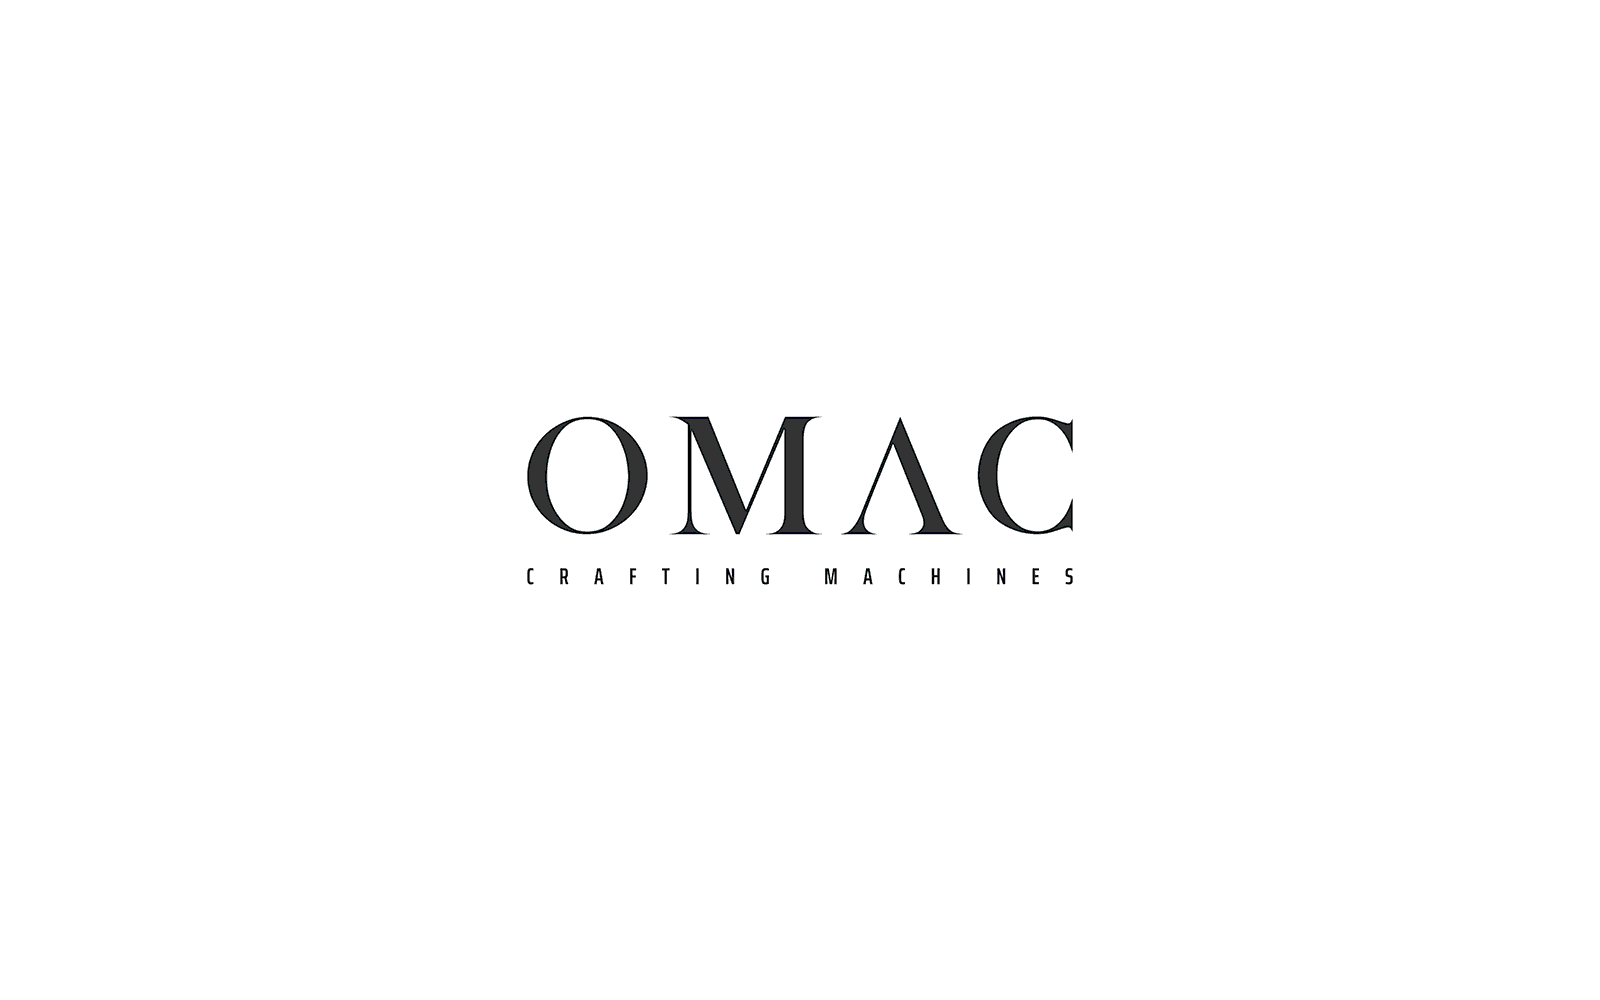 Case Omac